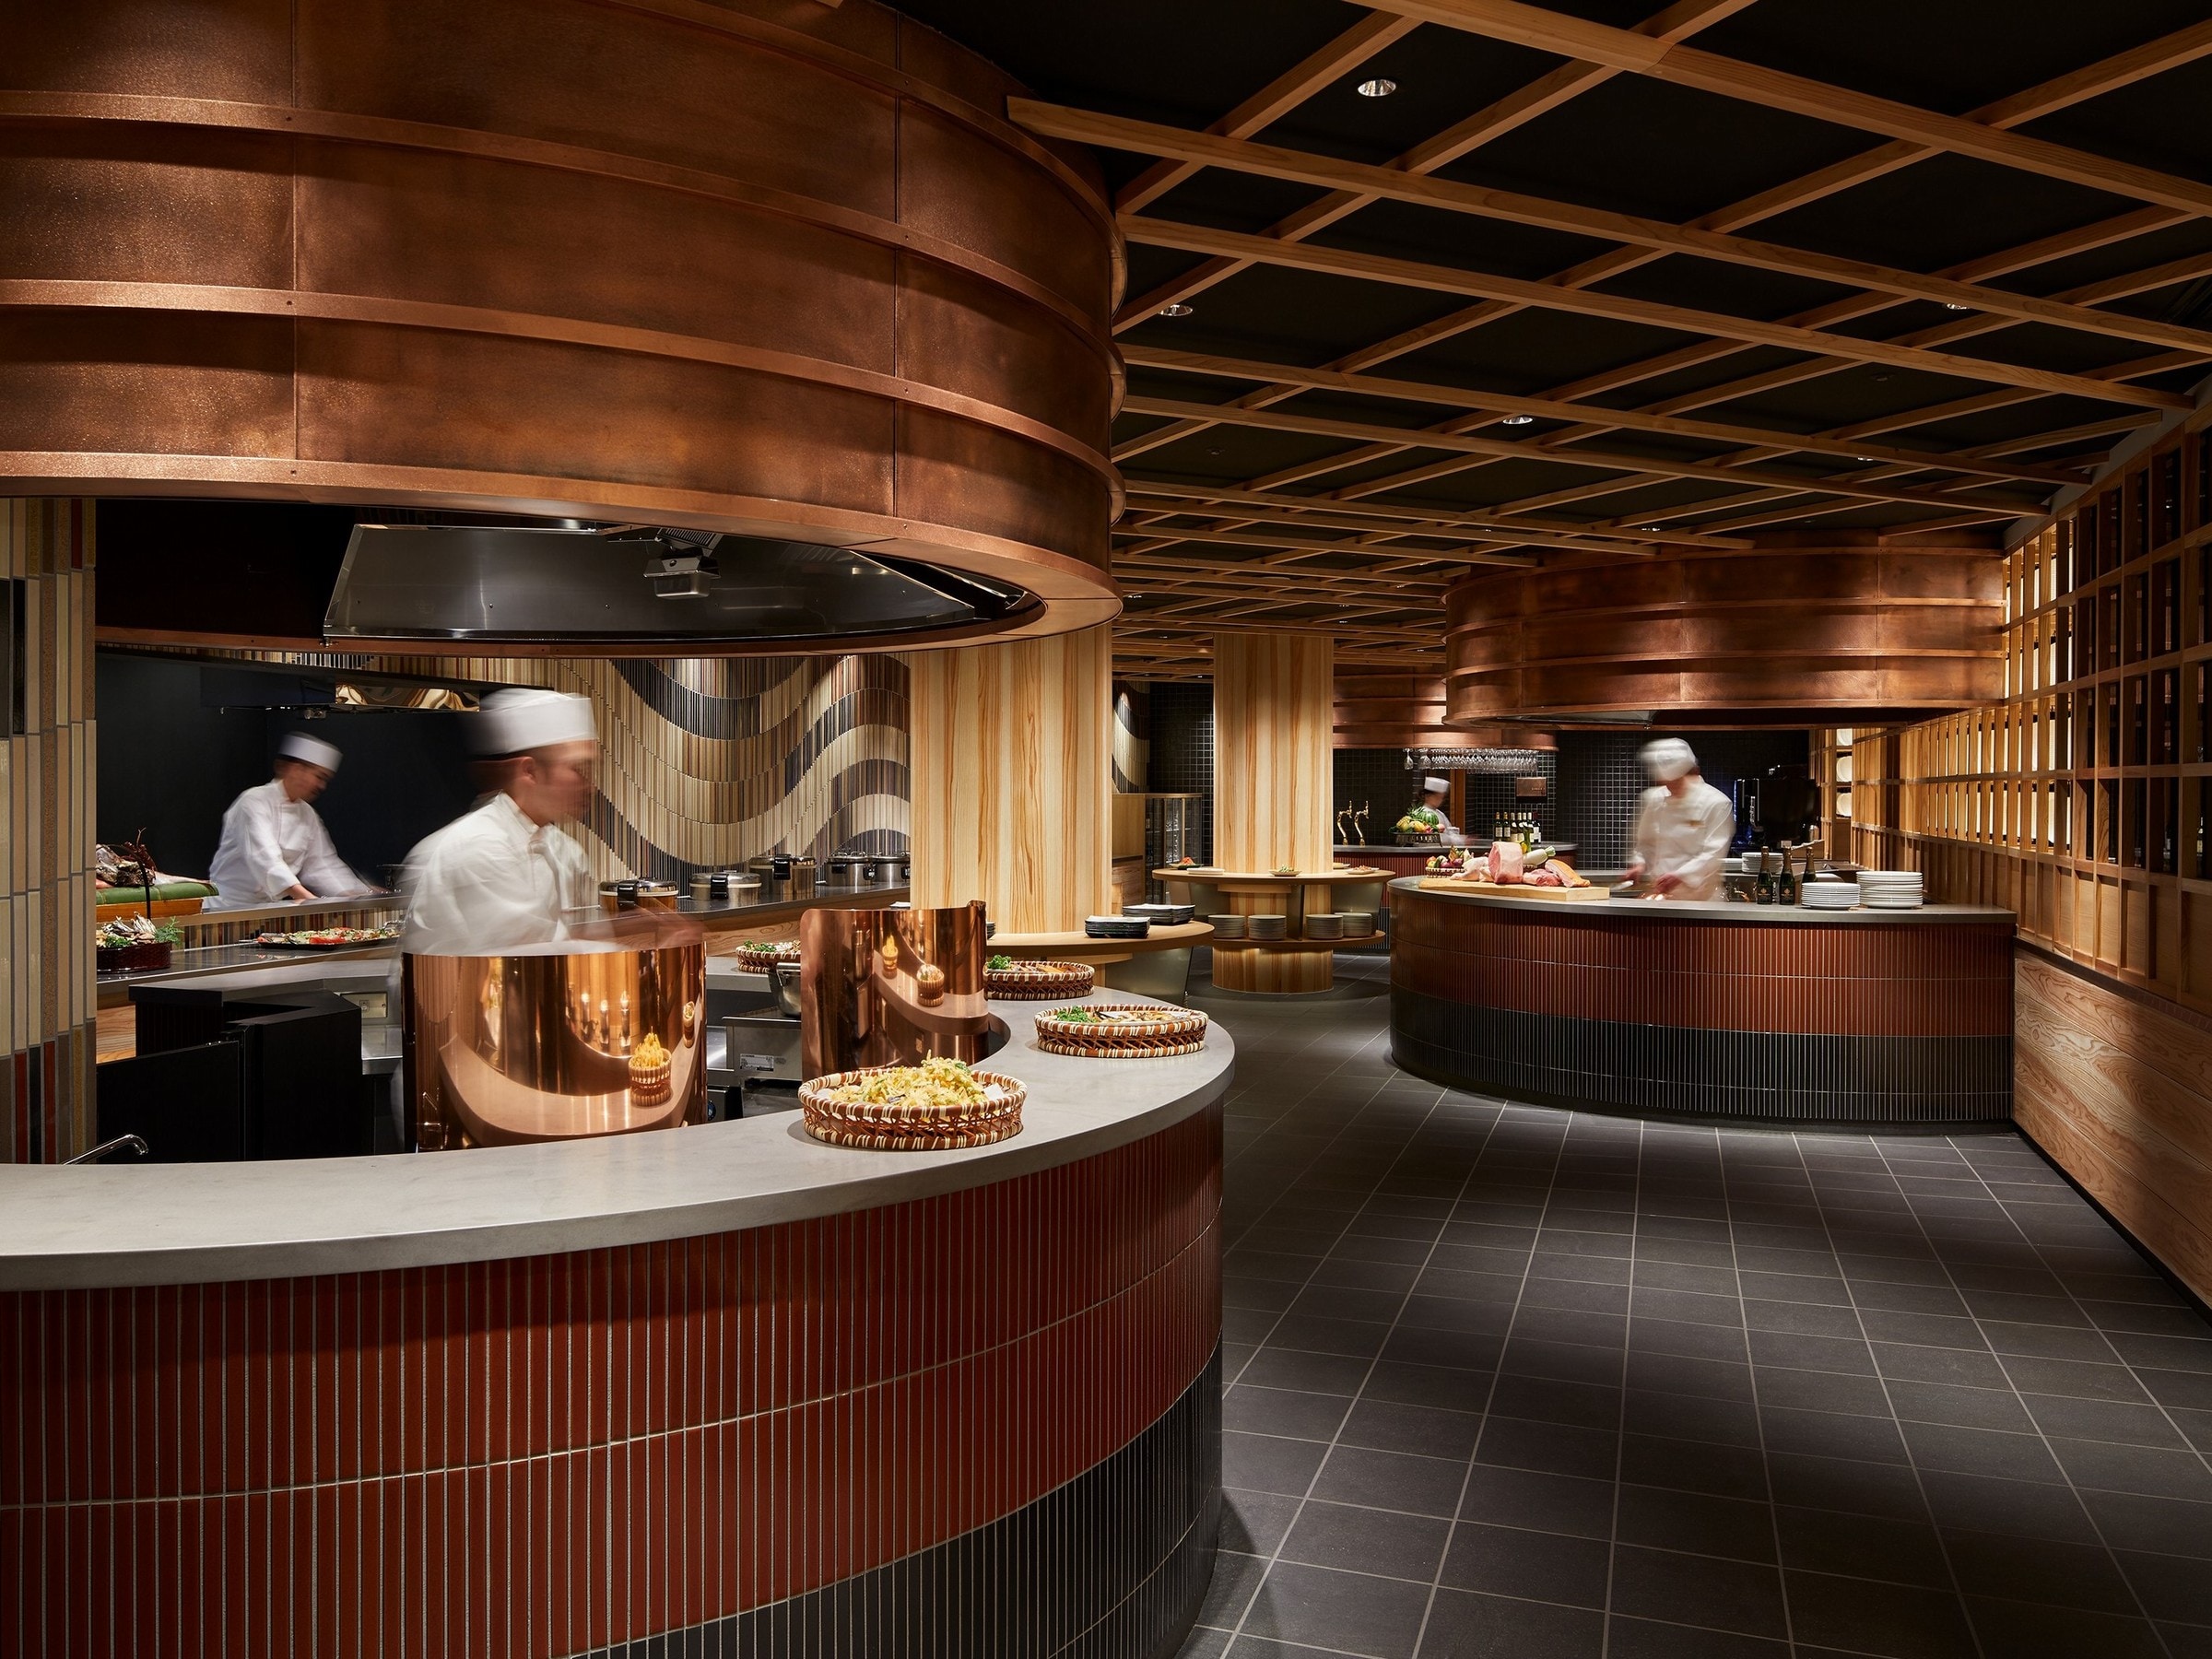 [8 million dining] Open kitchen that offers tempura, grilled local vegetables, Kumamoto ramen, etc.